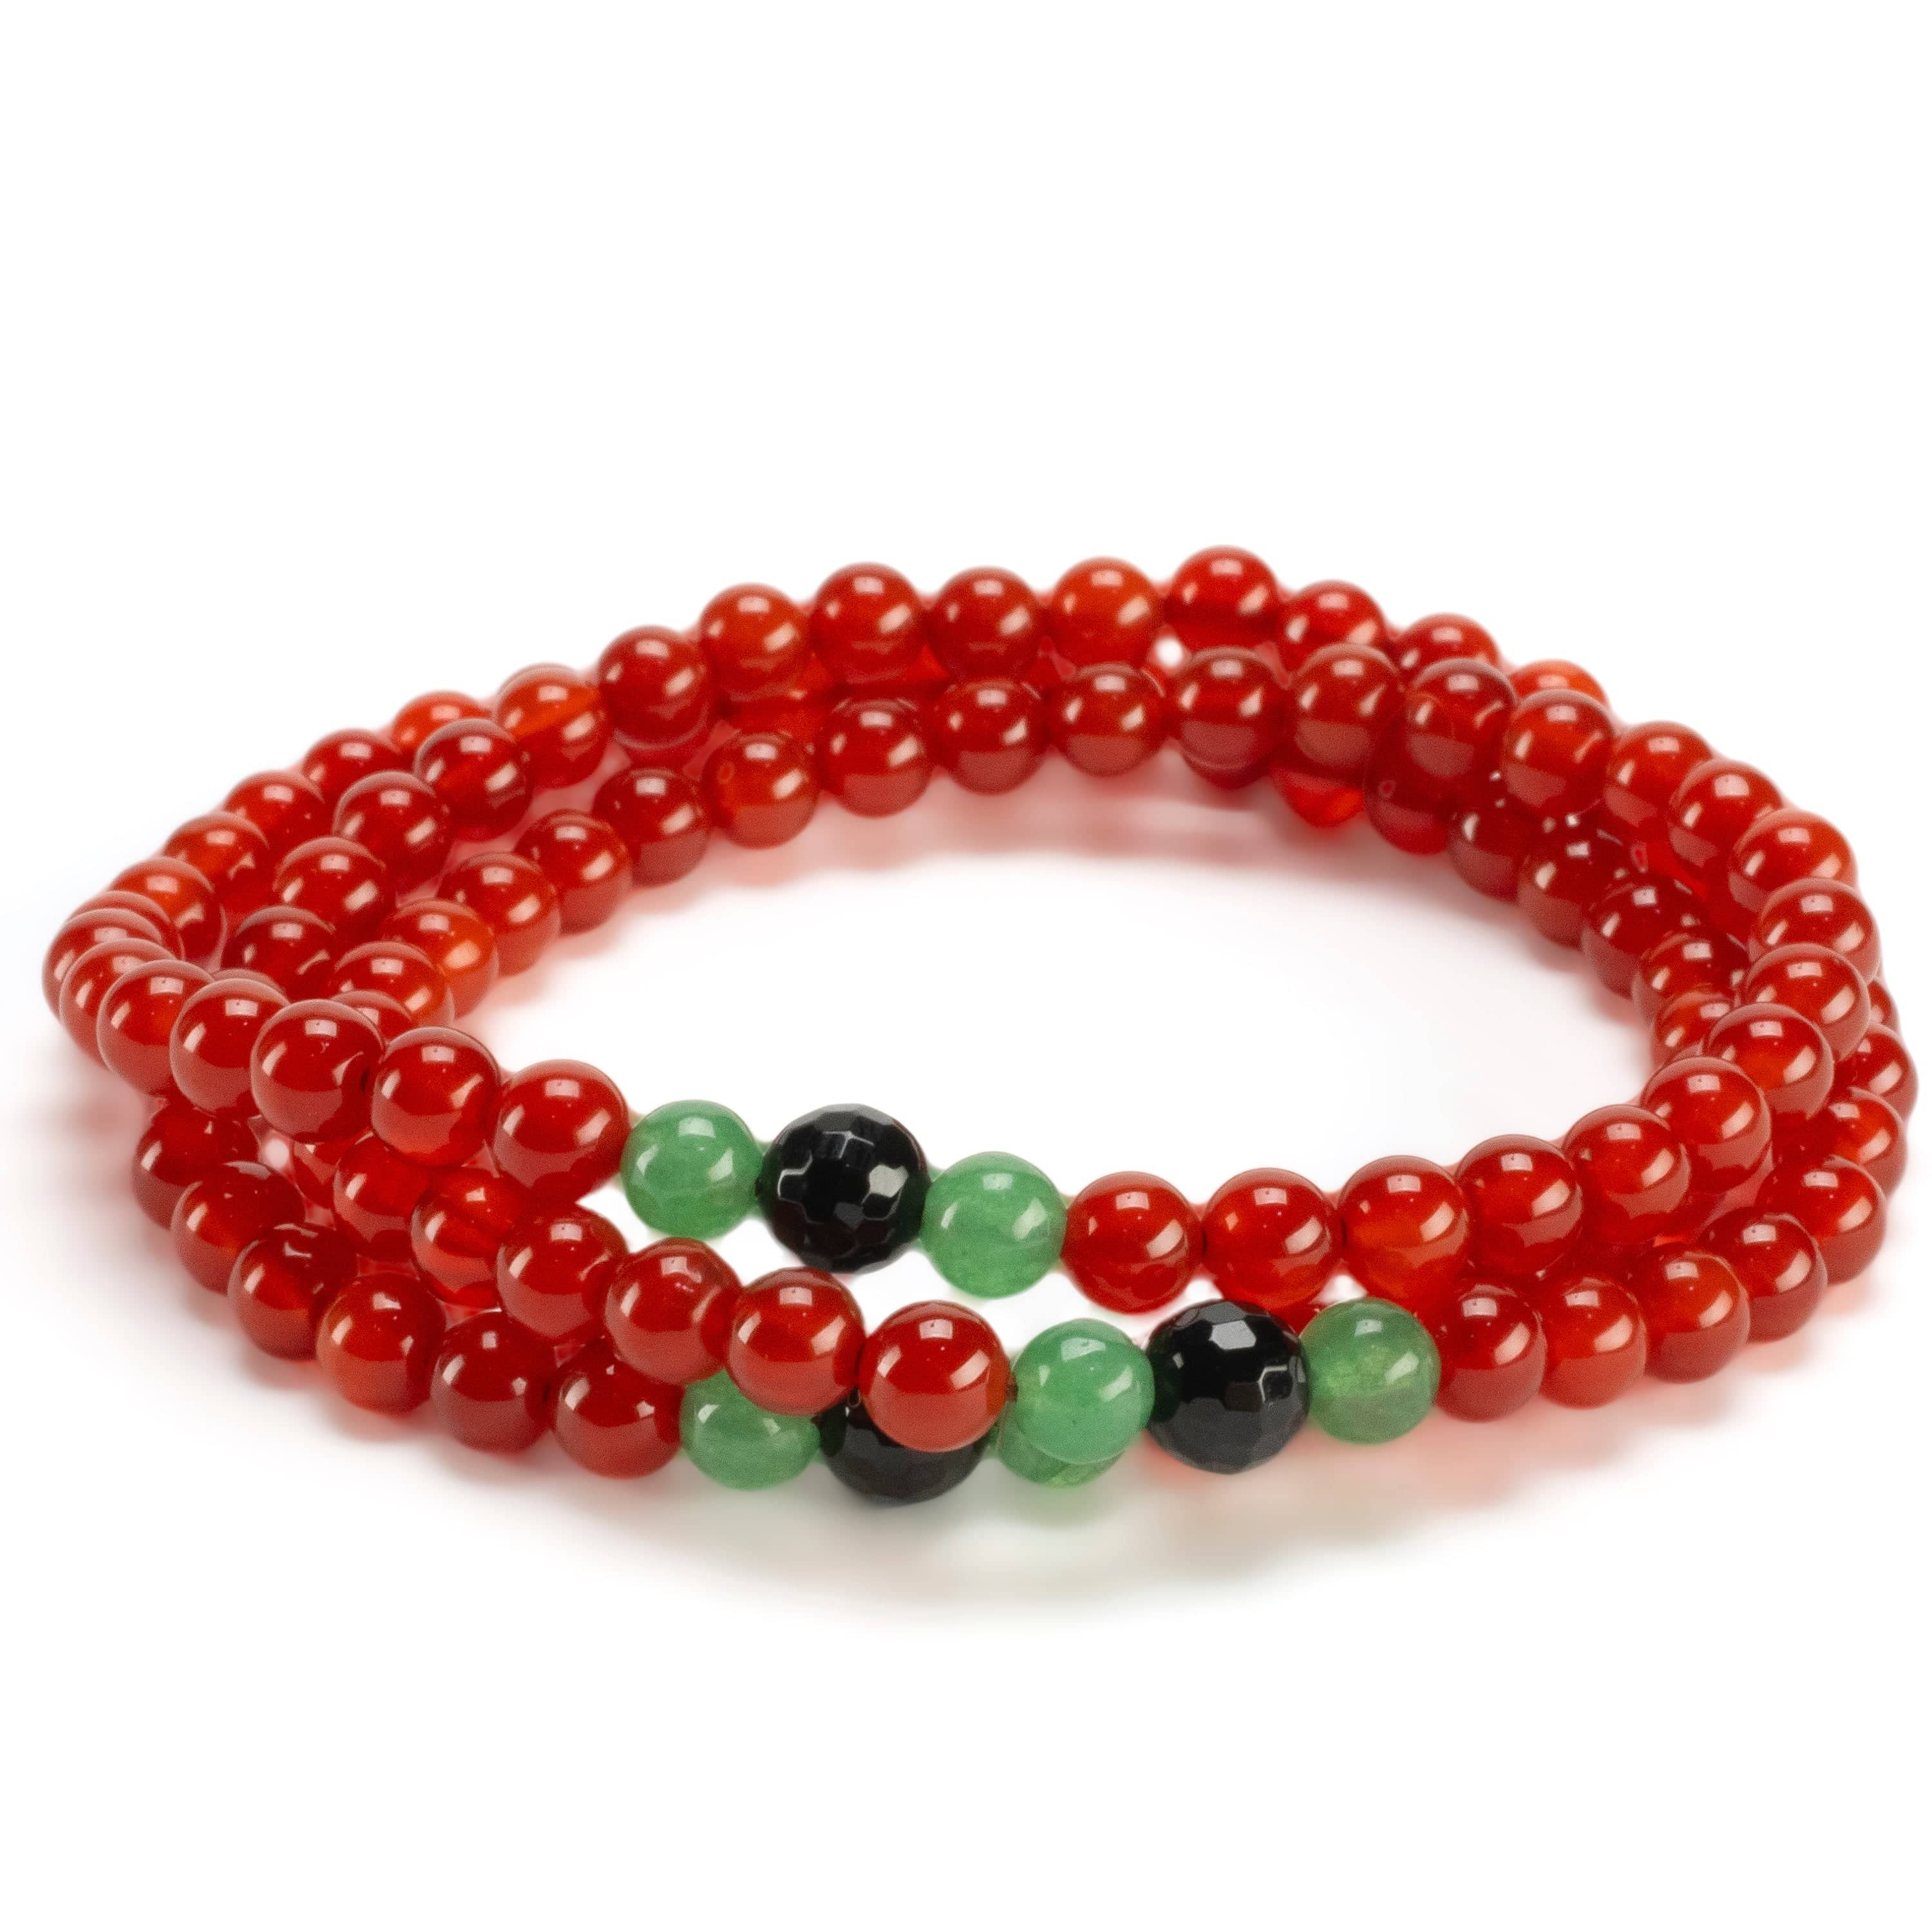 Carnelian Bracelet - Elastic - 6mm or 8mm Beads